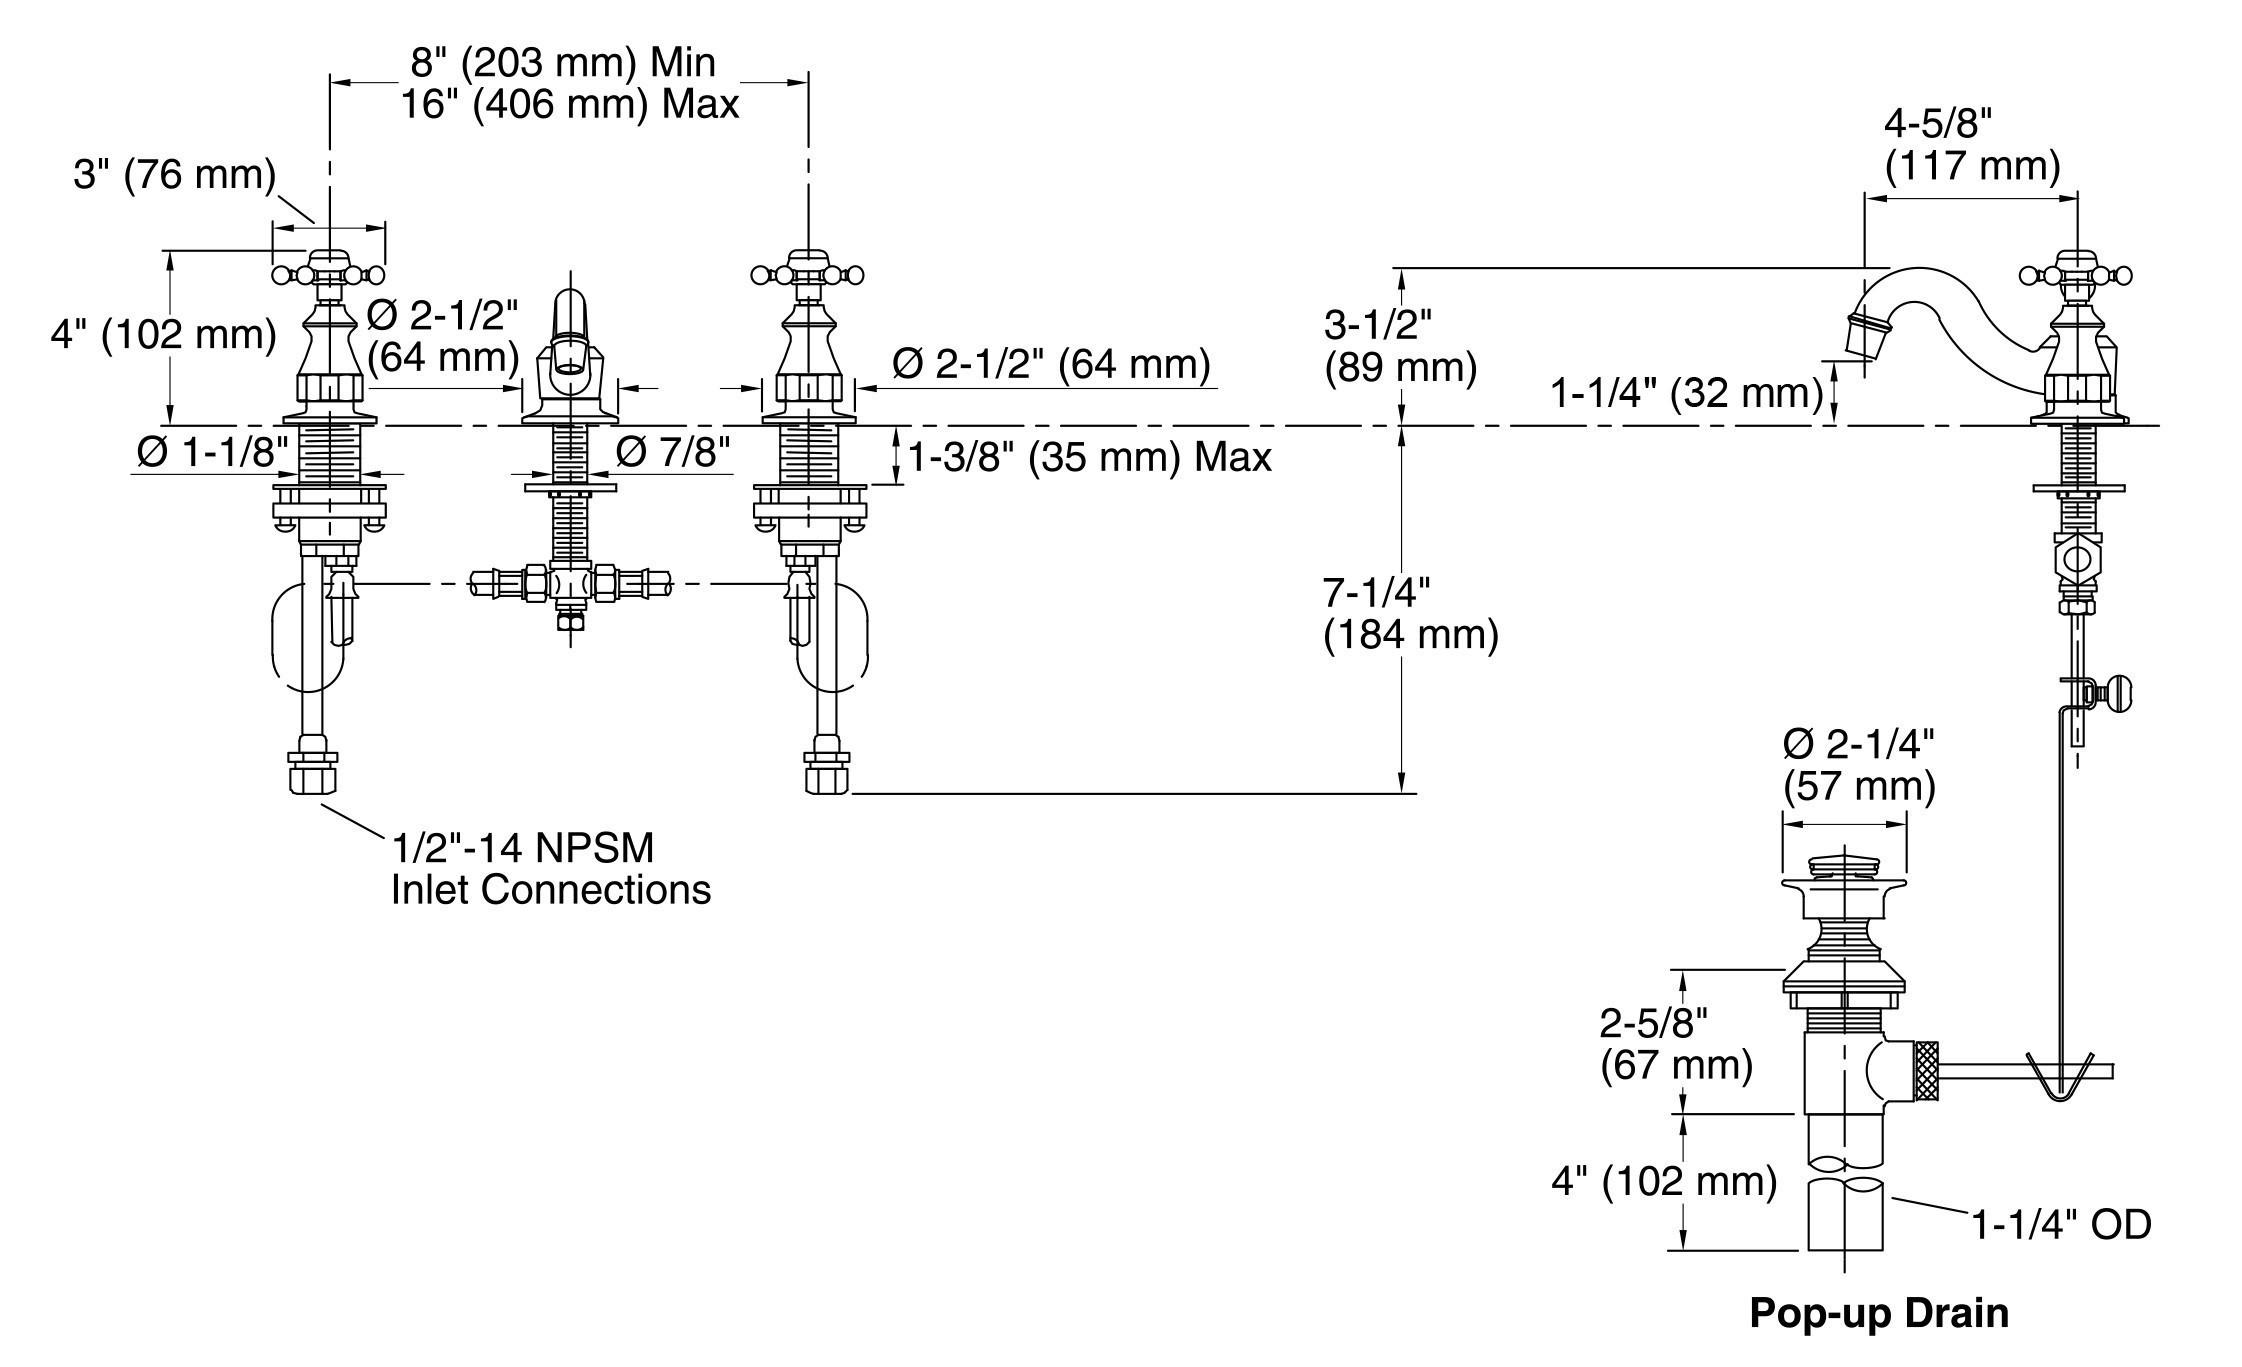 Kohler Engines Wiring Diagrams Wiring Diagram for Kohler Engine Valid Kohler Engines Wiring Diagrams Collection